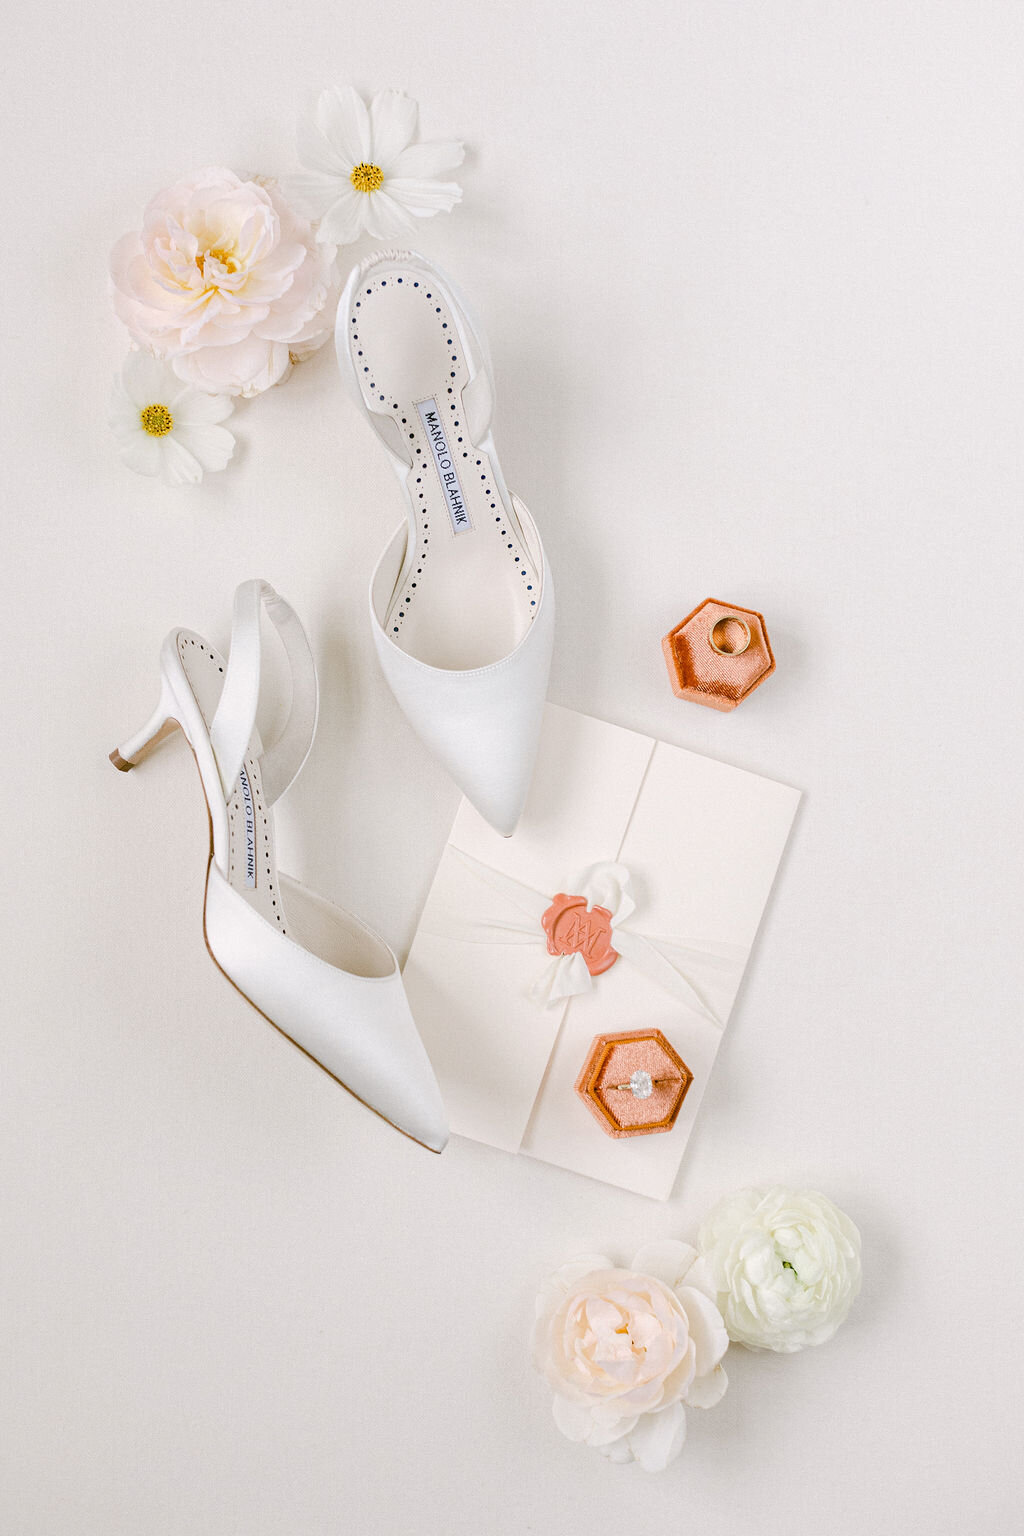 14-Bridal Shoes-Manolo Blahnik-Fall Wedding Details-Inns of Aurora Wedding-Verve Event Co (1)